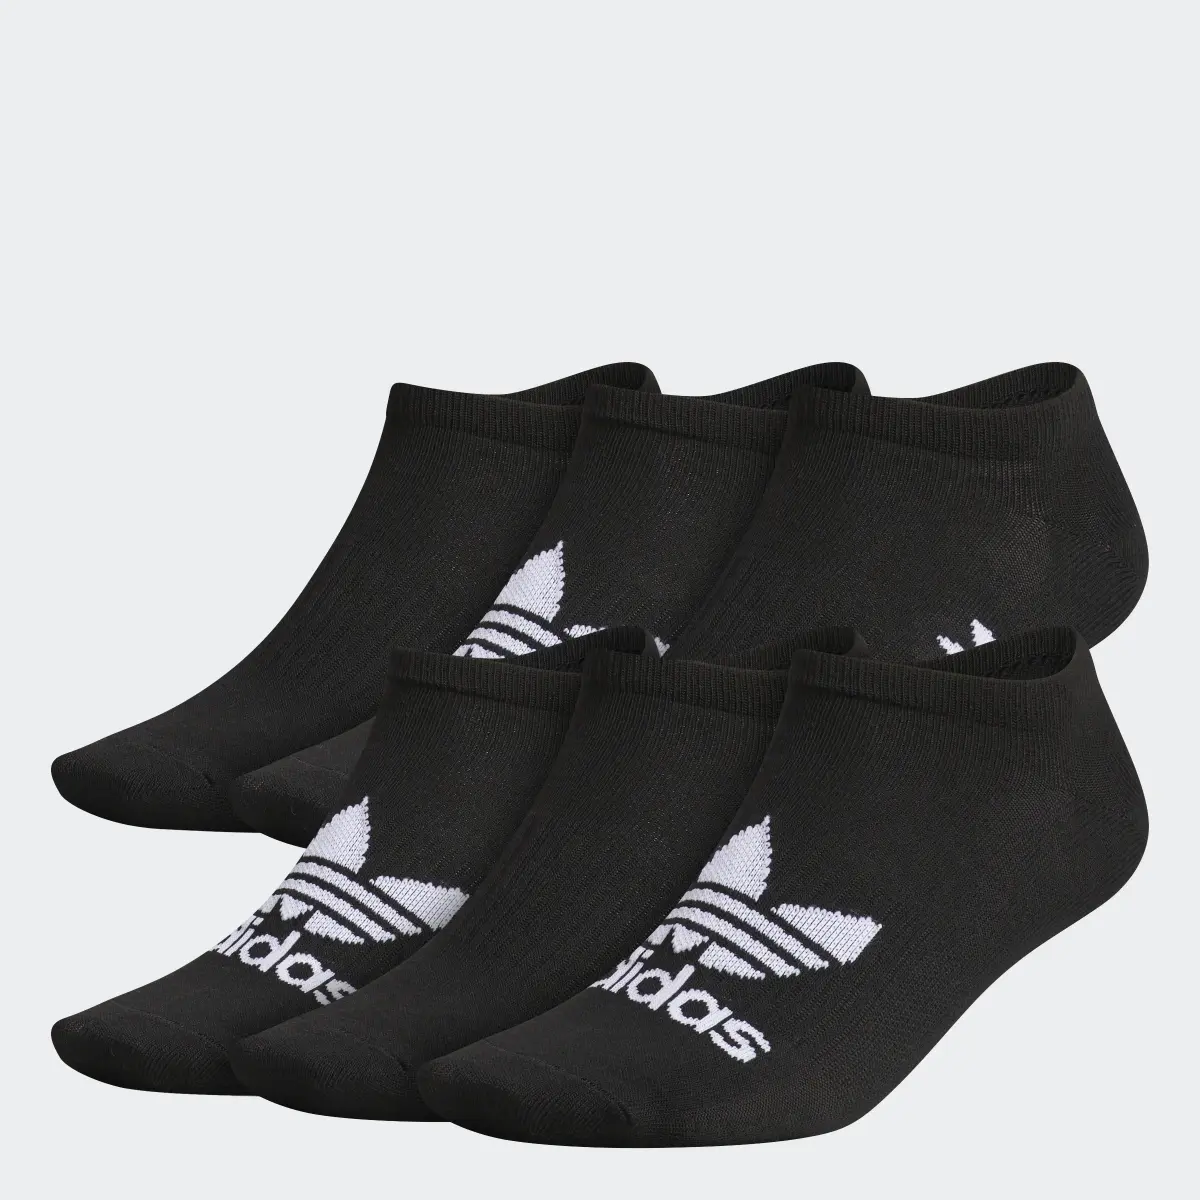 Adidas Classic Superlite No-Show Socks 6 Pairs. 1